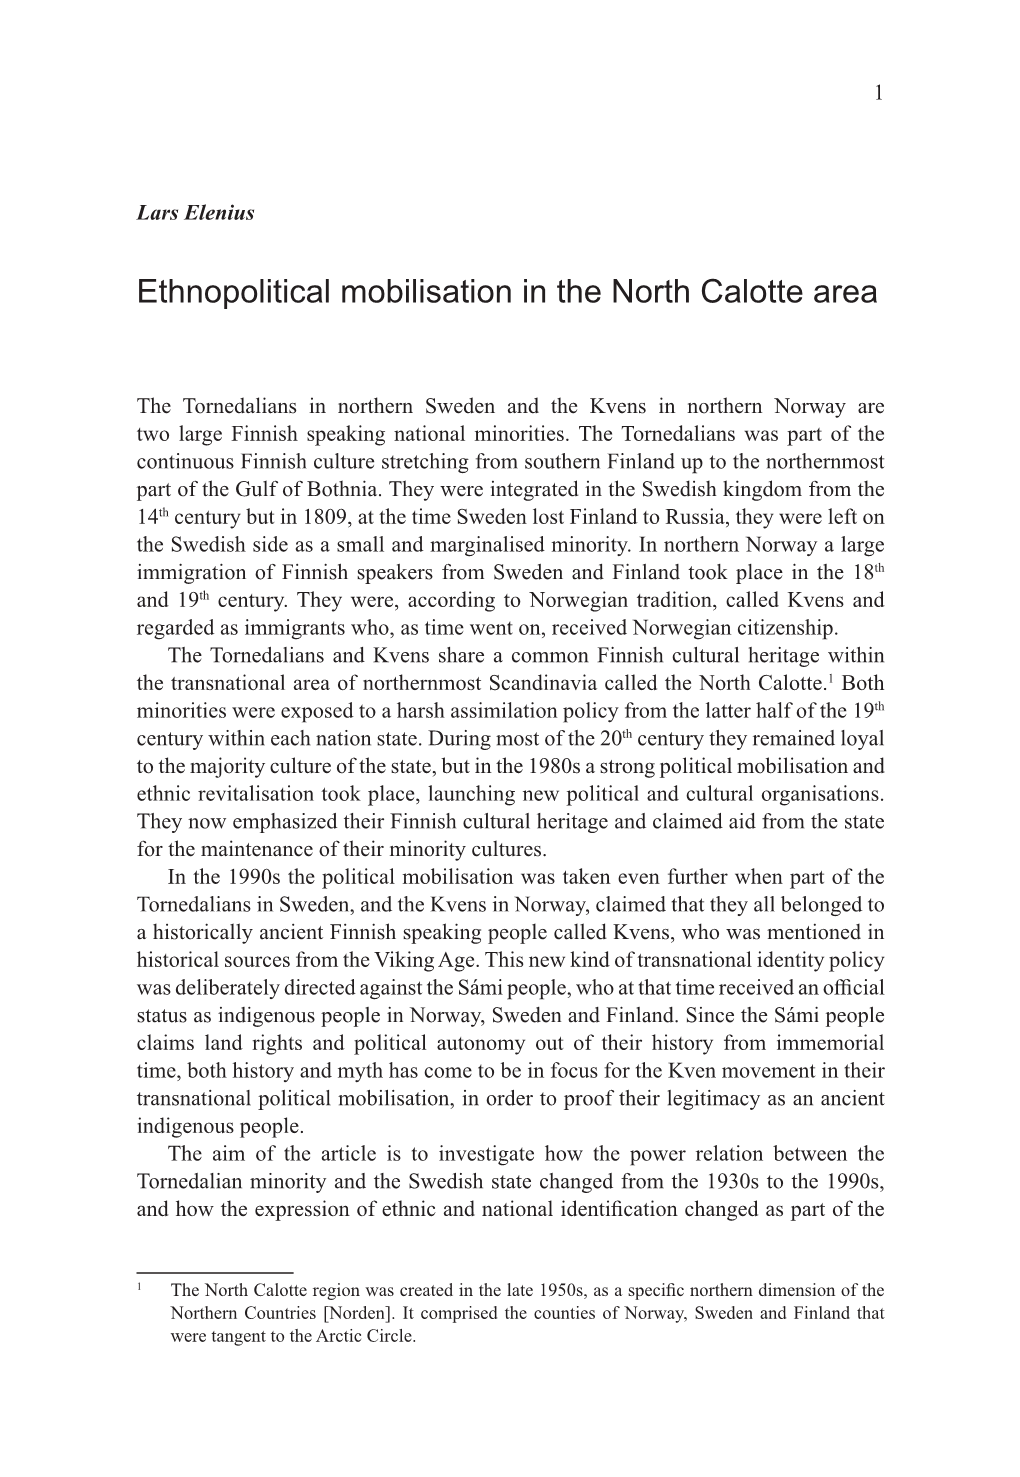 Ethnopolitical Mobilisation in the North Calotte Area